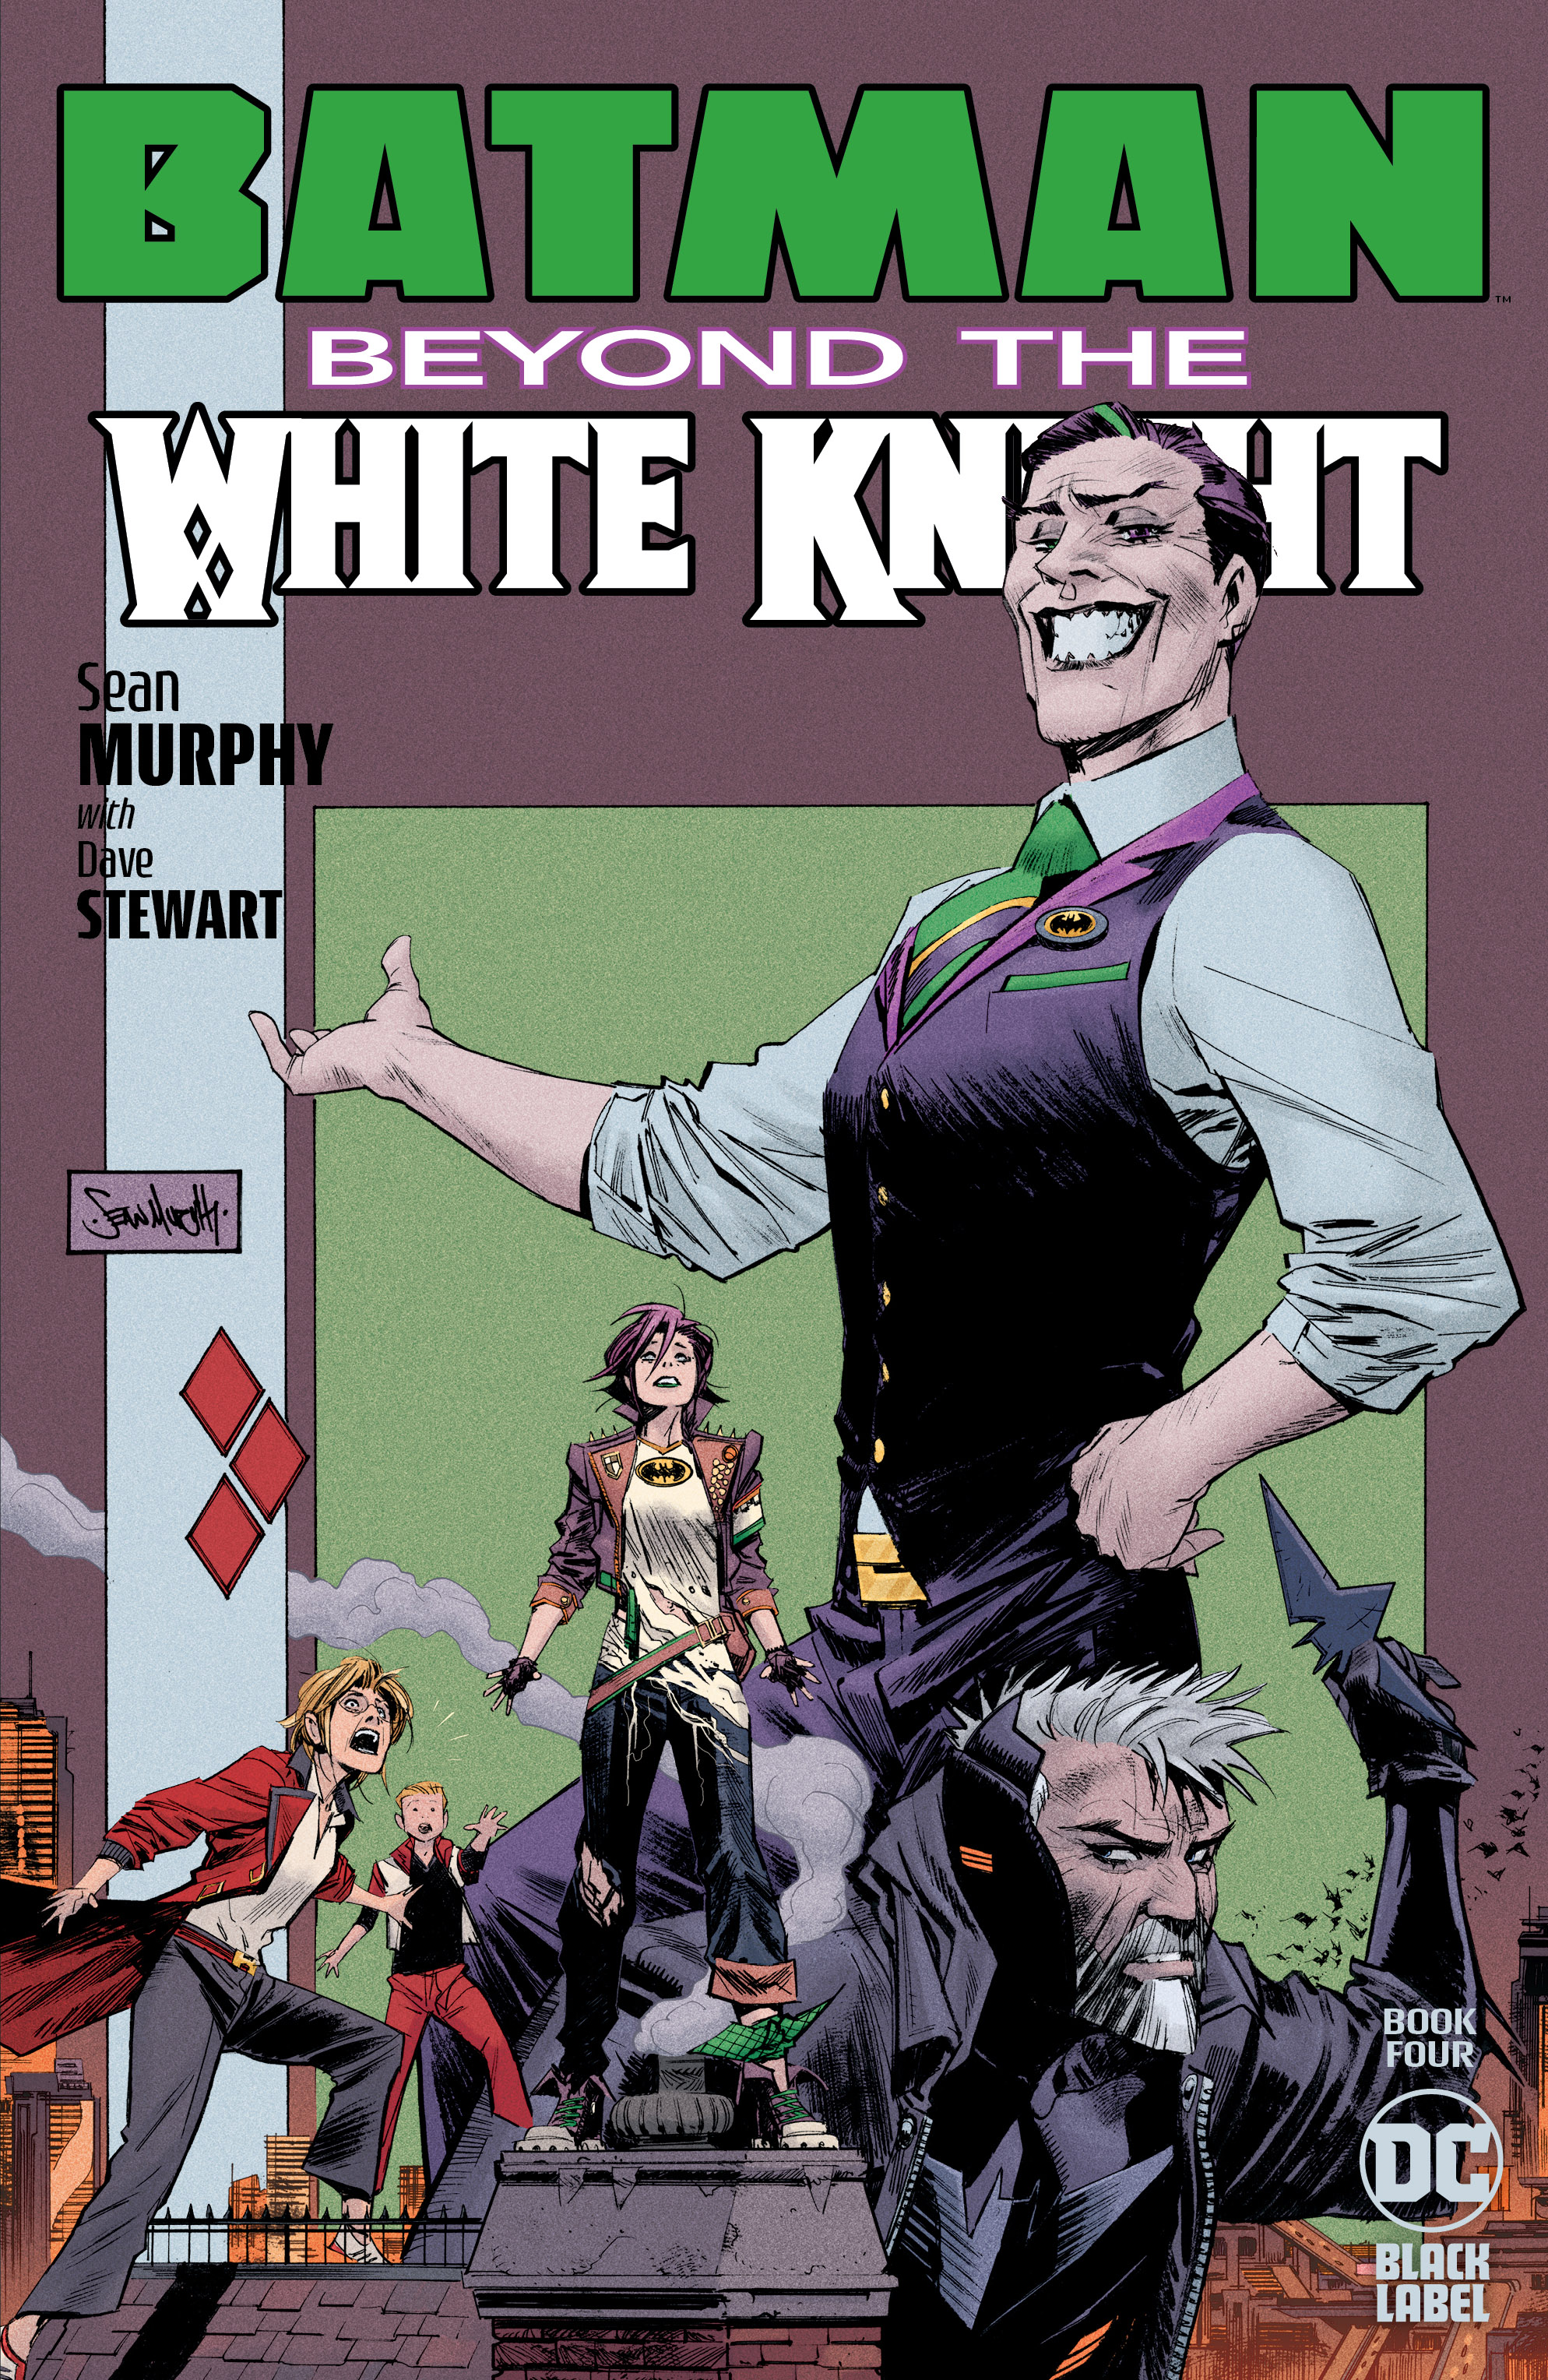 Batman Beyond The White Knight #4 Cover A Sean Murphy (Mature) (Of 8)